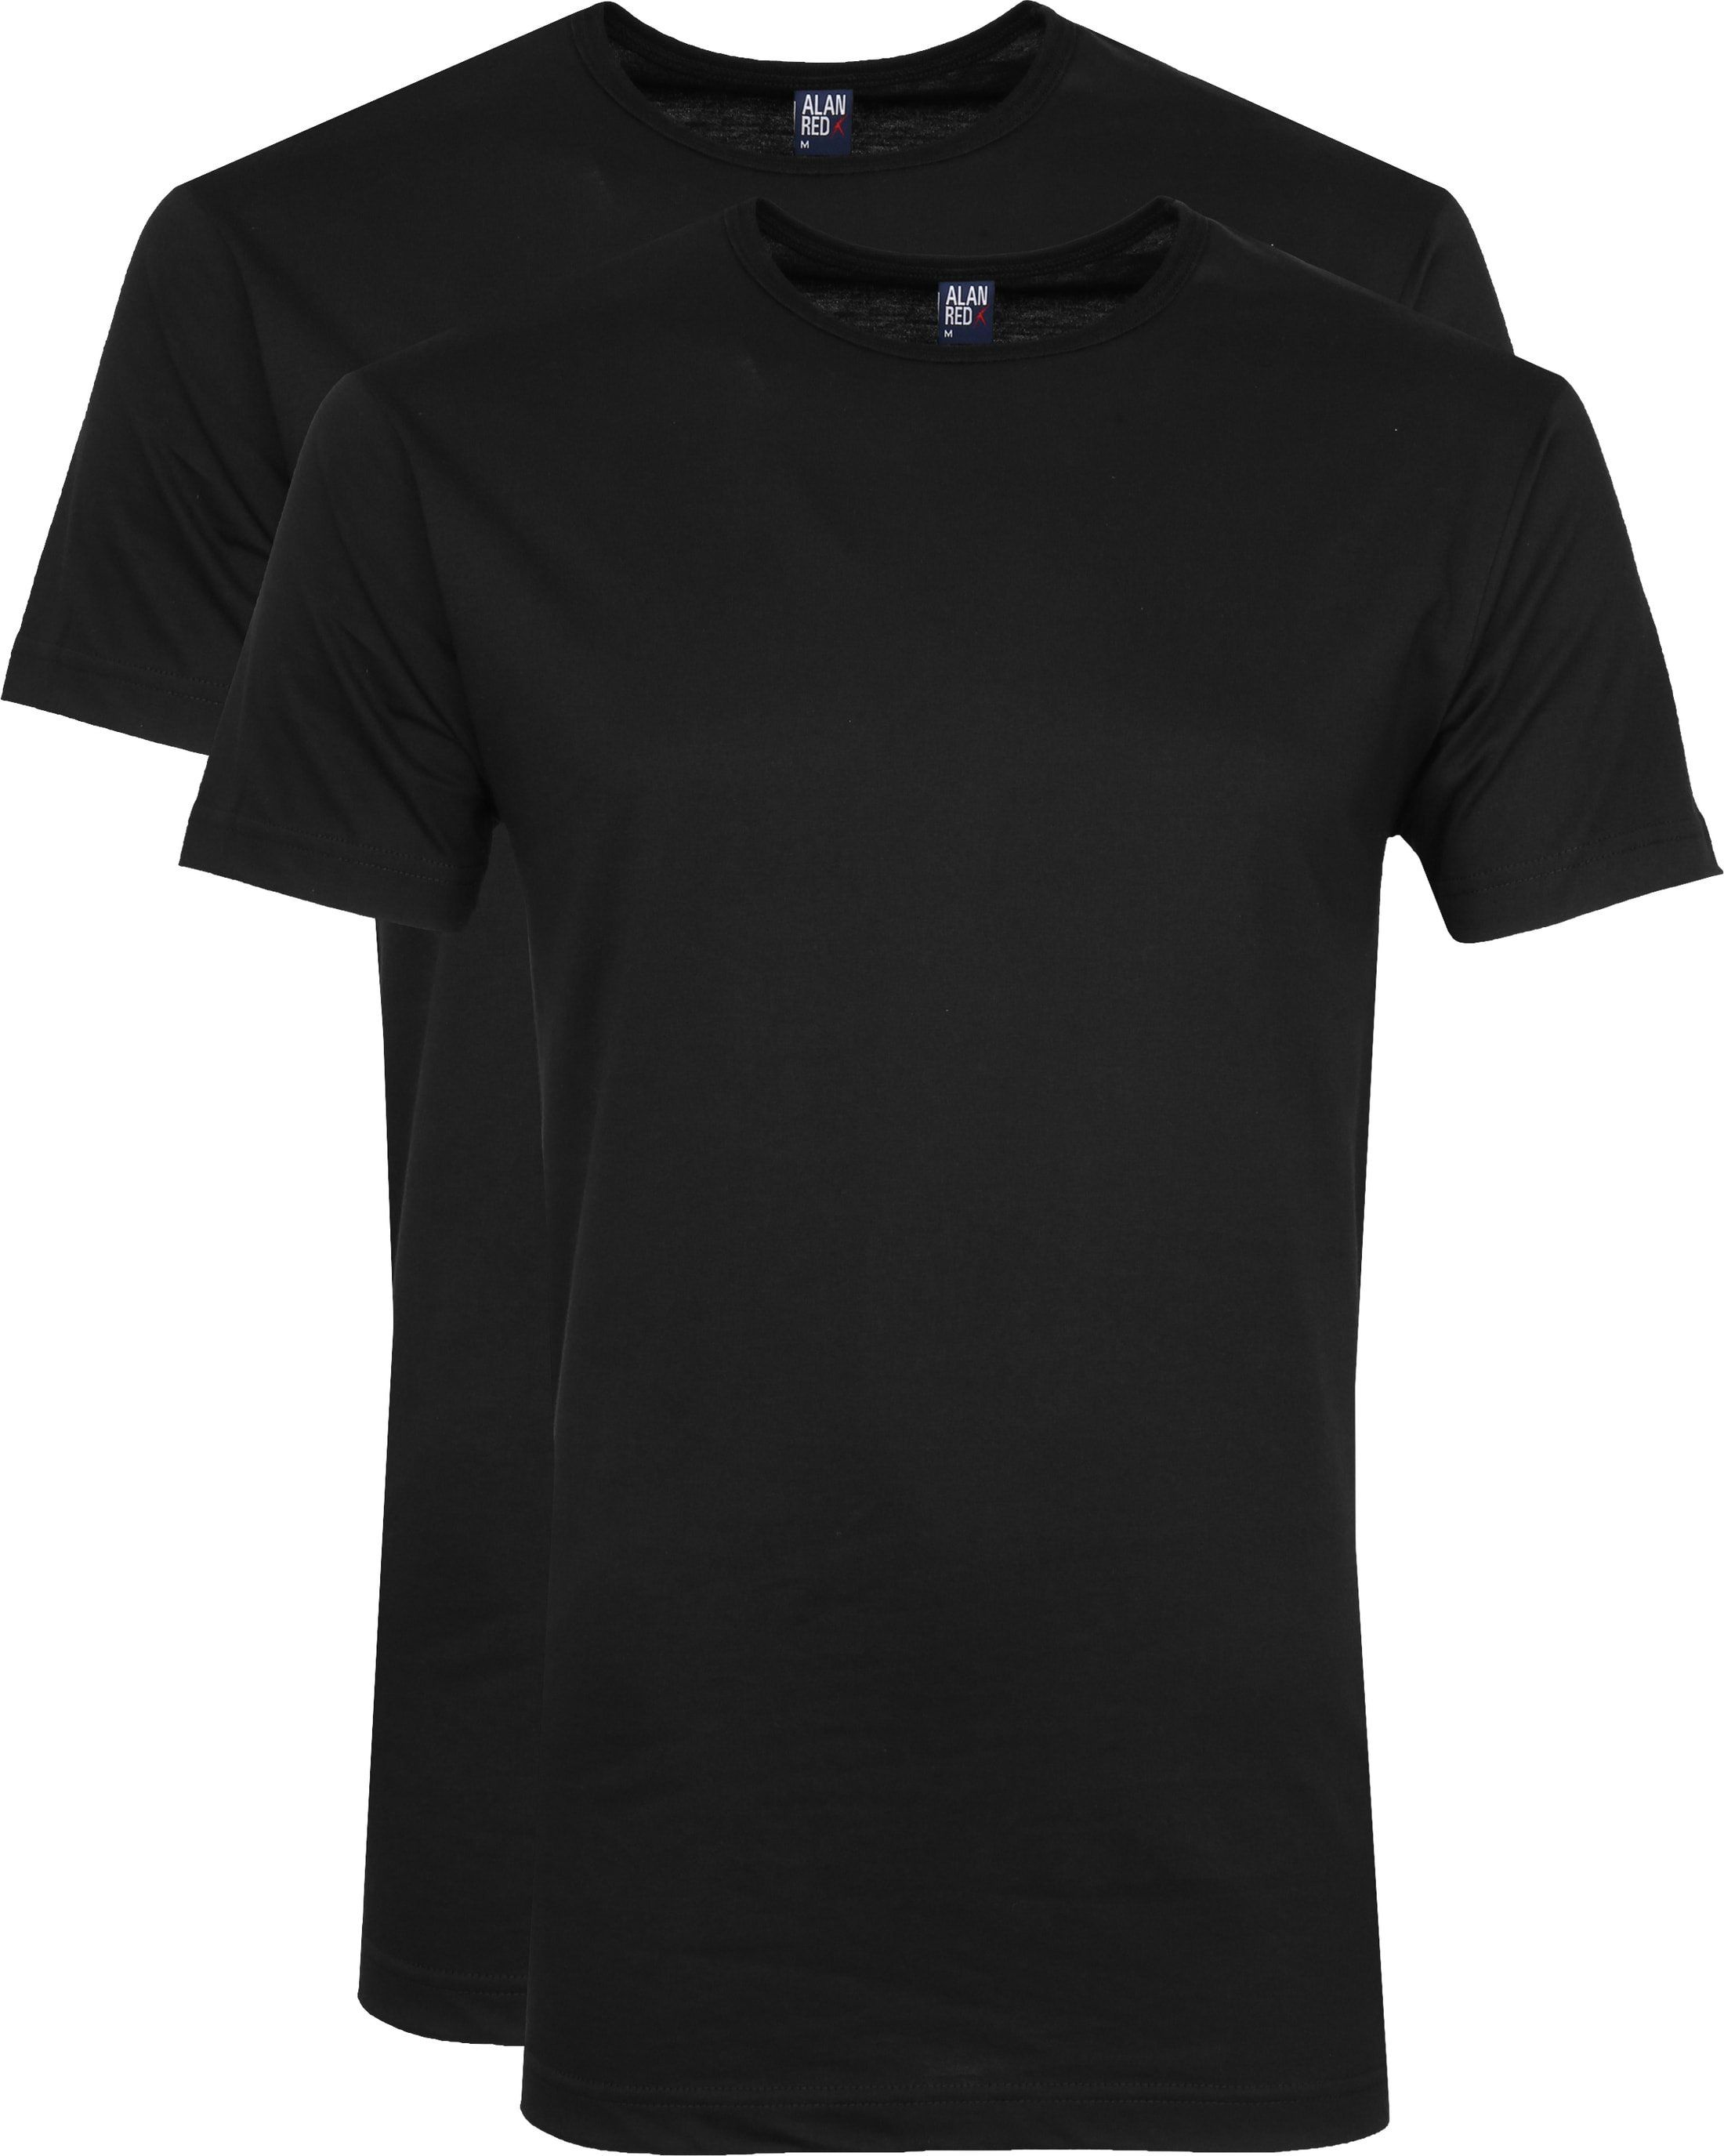 Alan Red Derby O-Neck T-Shirt (2Pack) Black size XXL